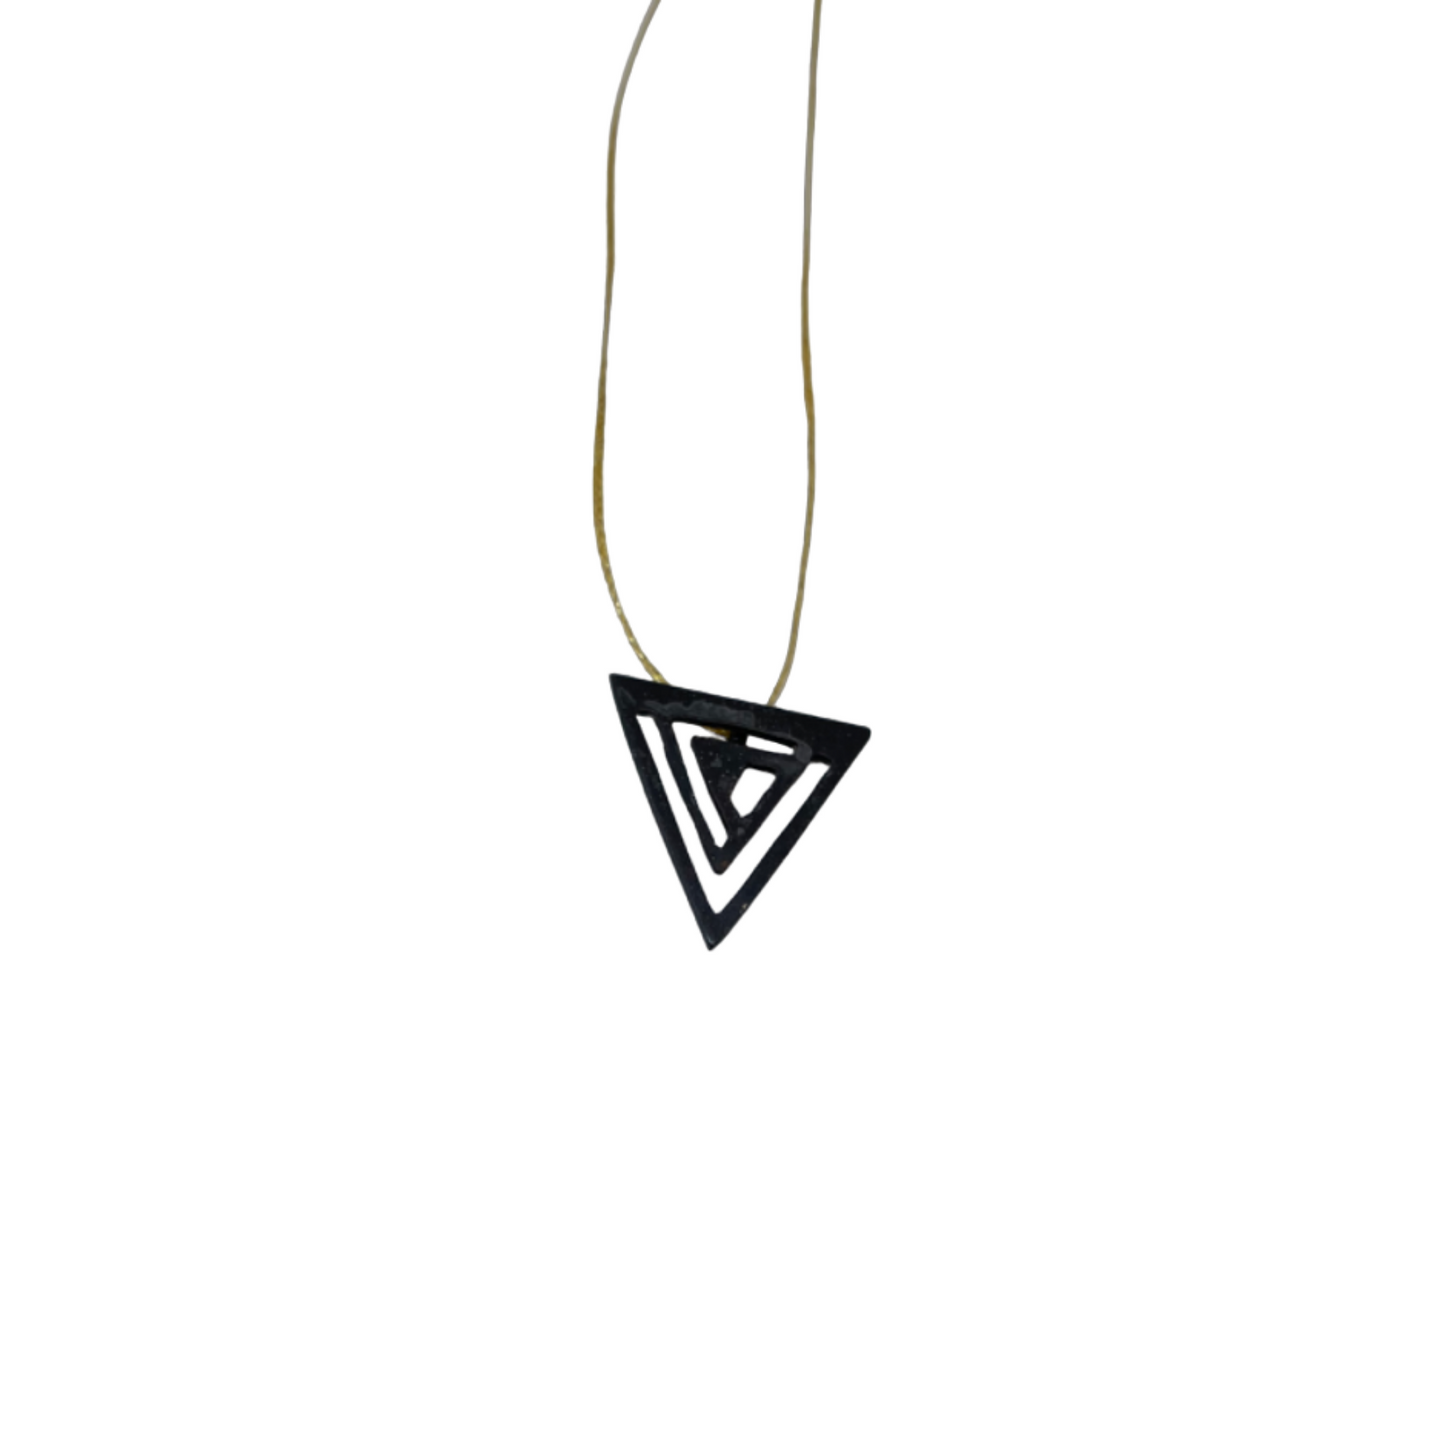 Oxidised brass necklace | Black Pyramides Necklace - CURIUDO